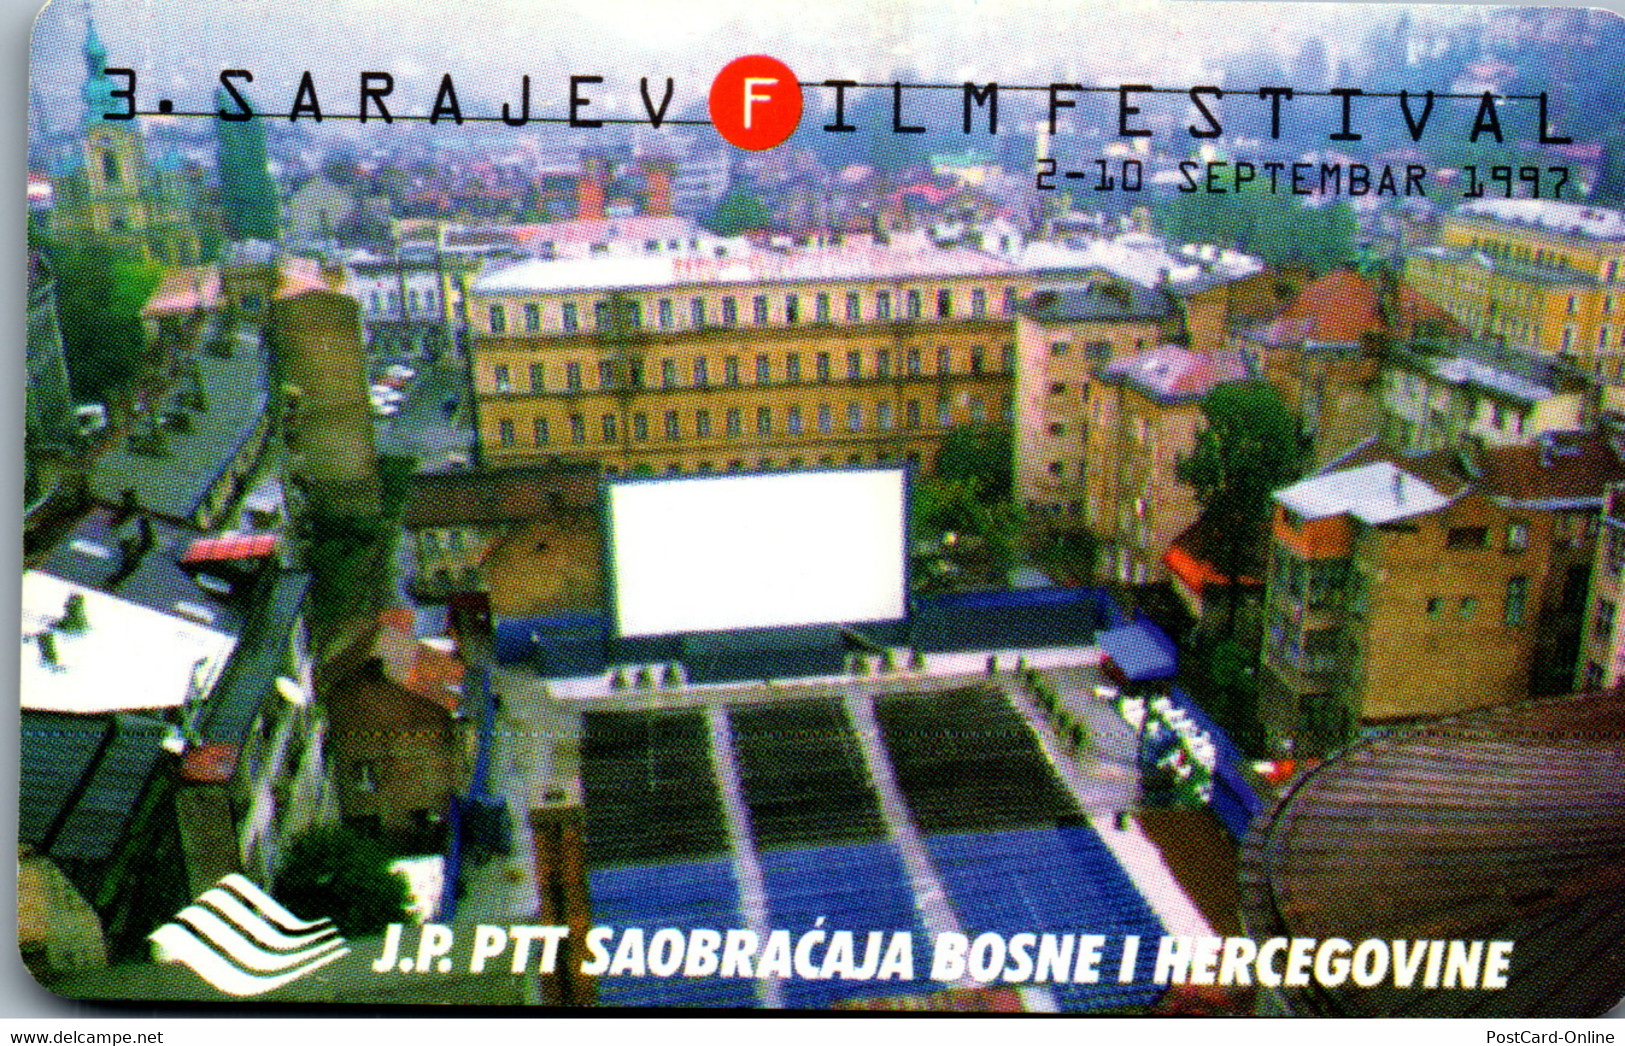 31762 - Bosnien Herzegovina - PTT , Sarajevo Filfestival 1997 - Bosnië